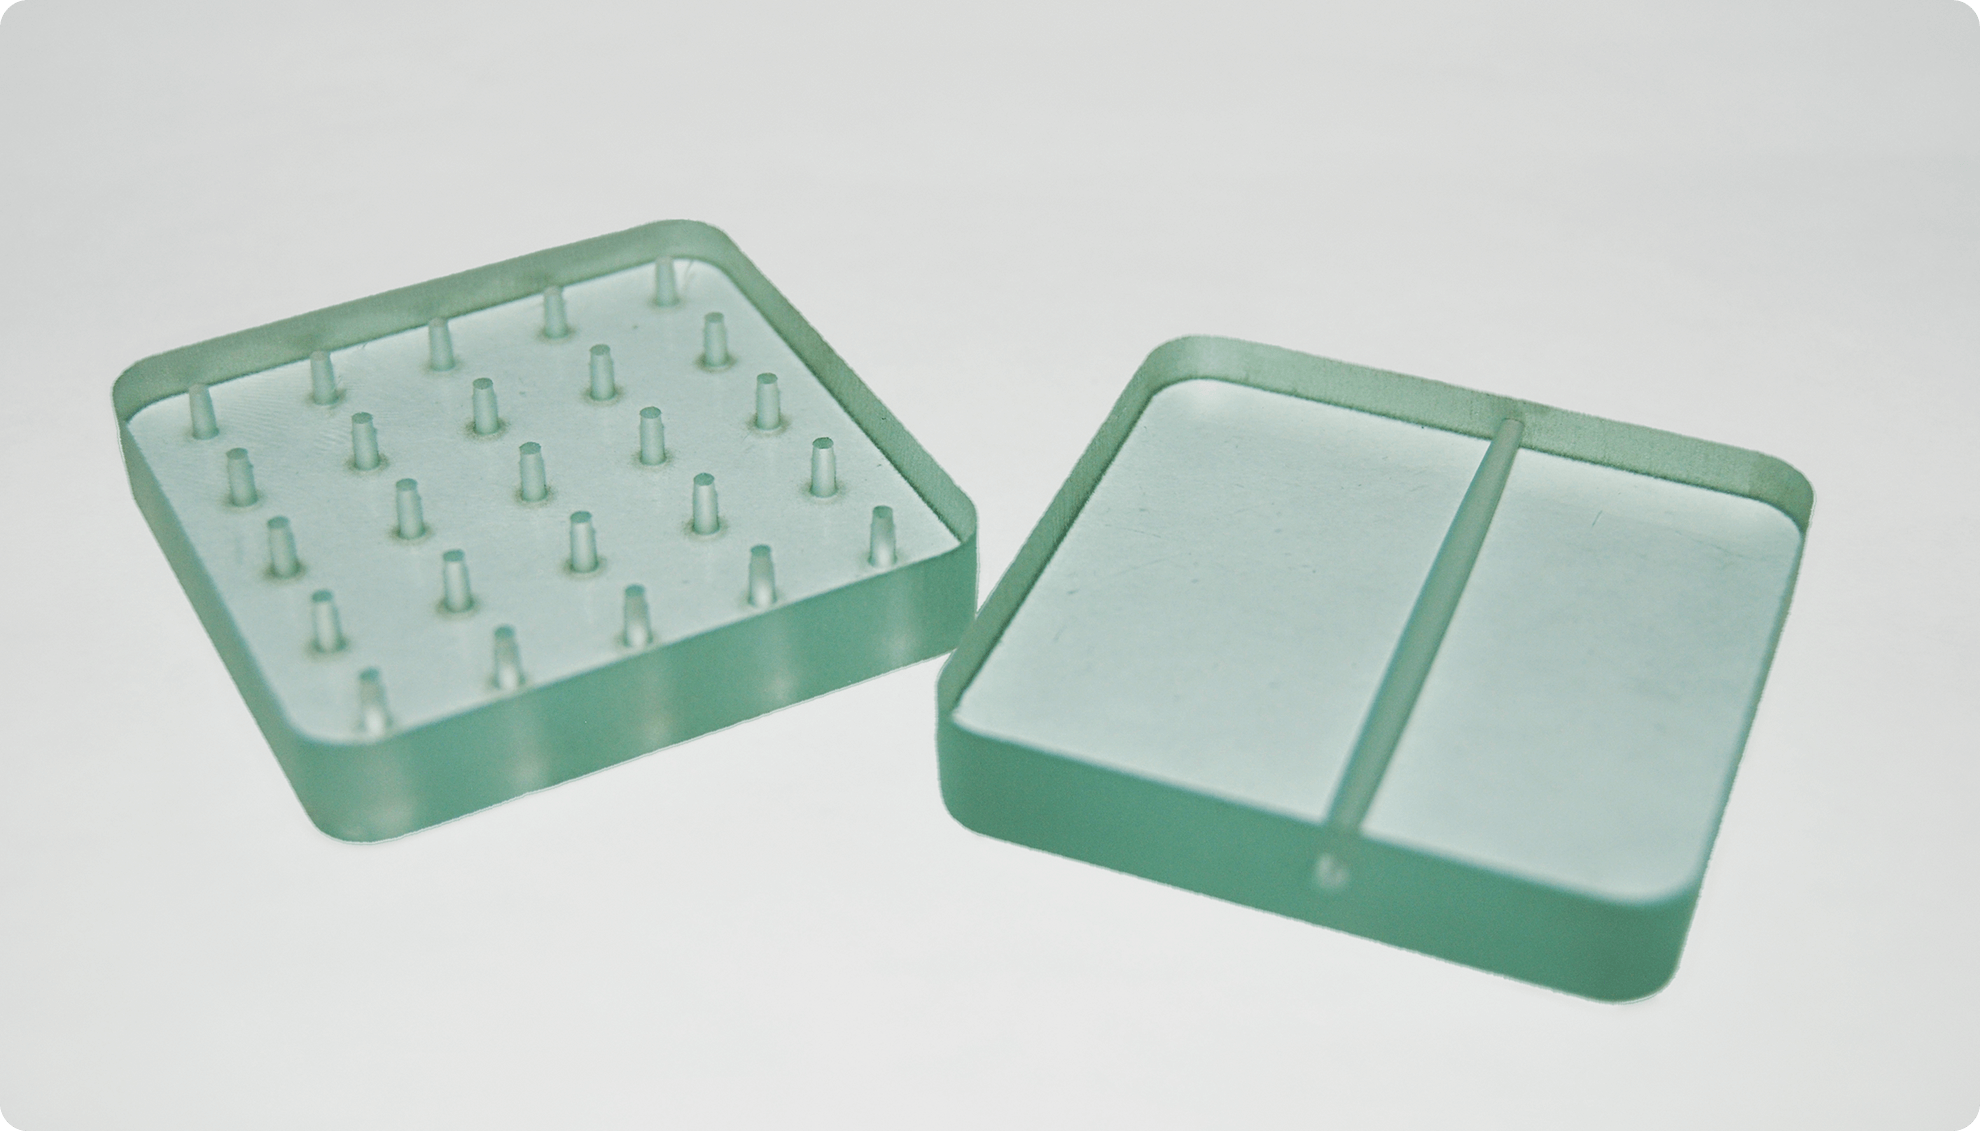 Two waterjet cut parts showing pierces in glass.